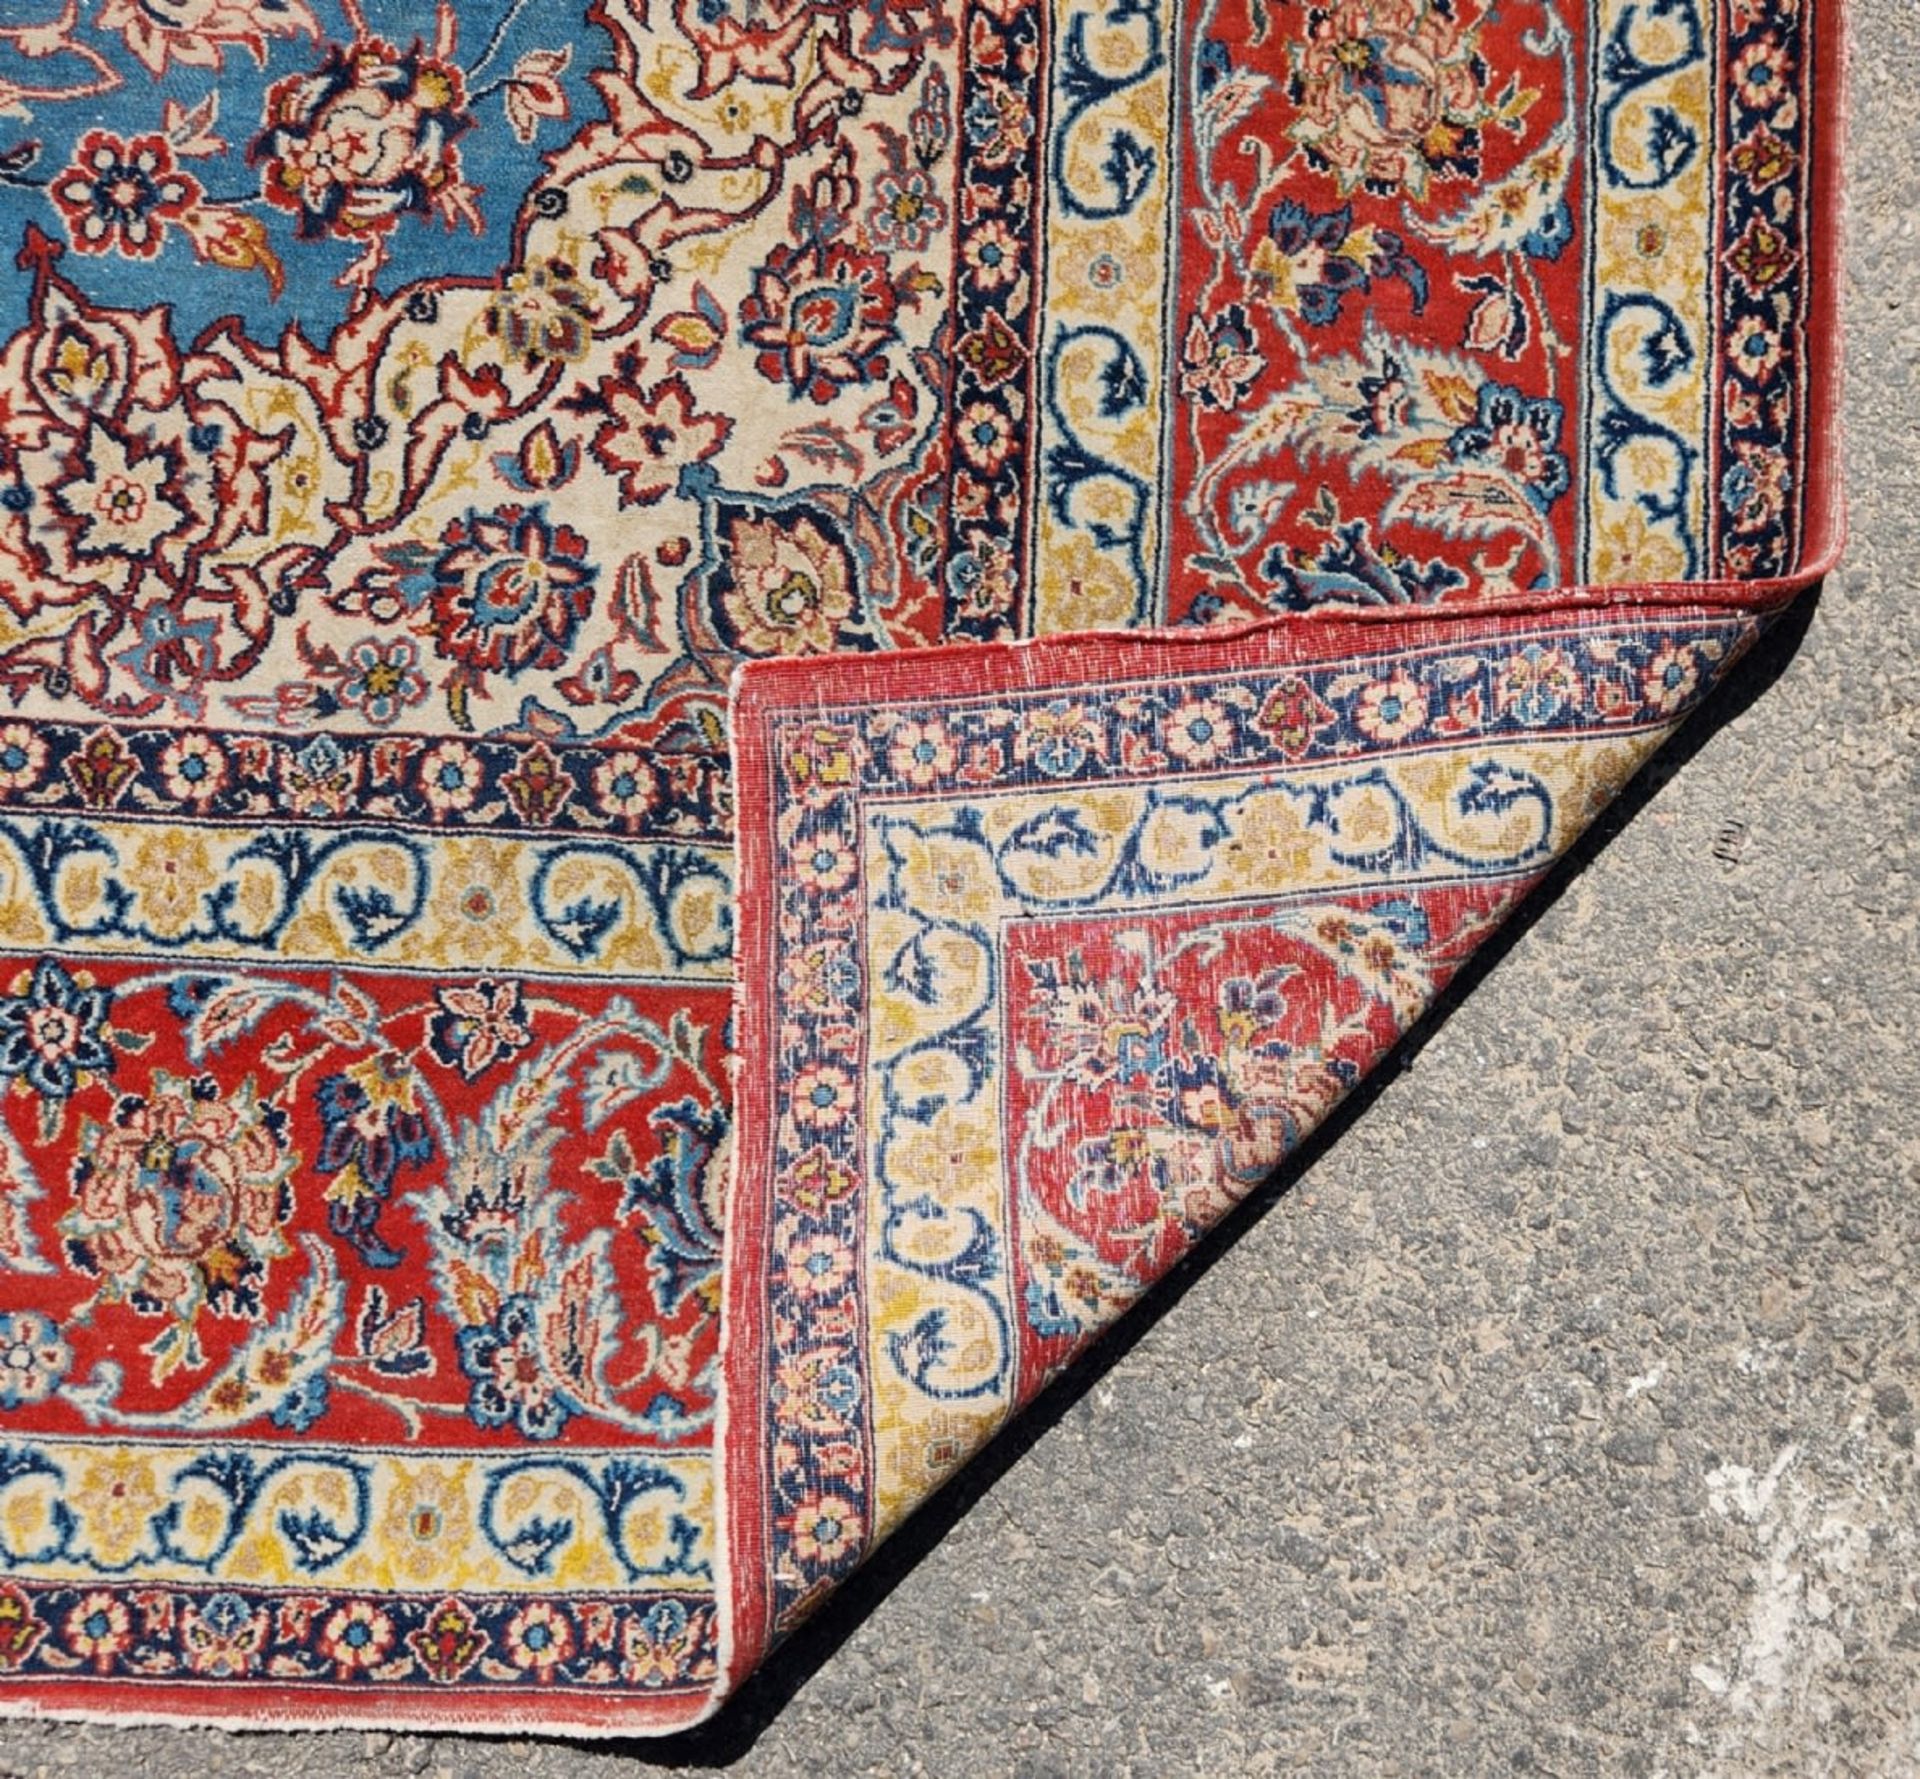 Handmade woven Persian rug, carpet size: 245X150 cm. - Image 3 of 3